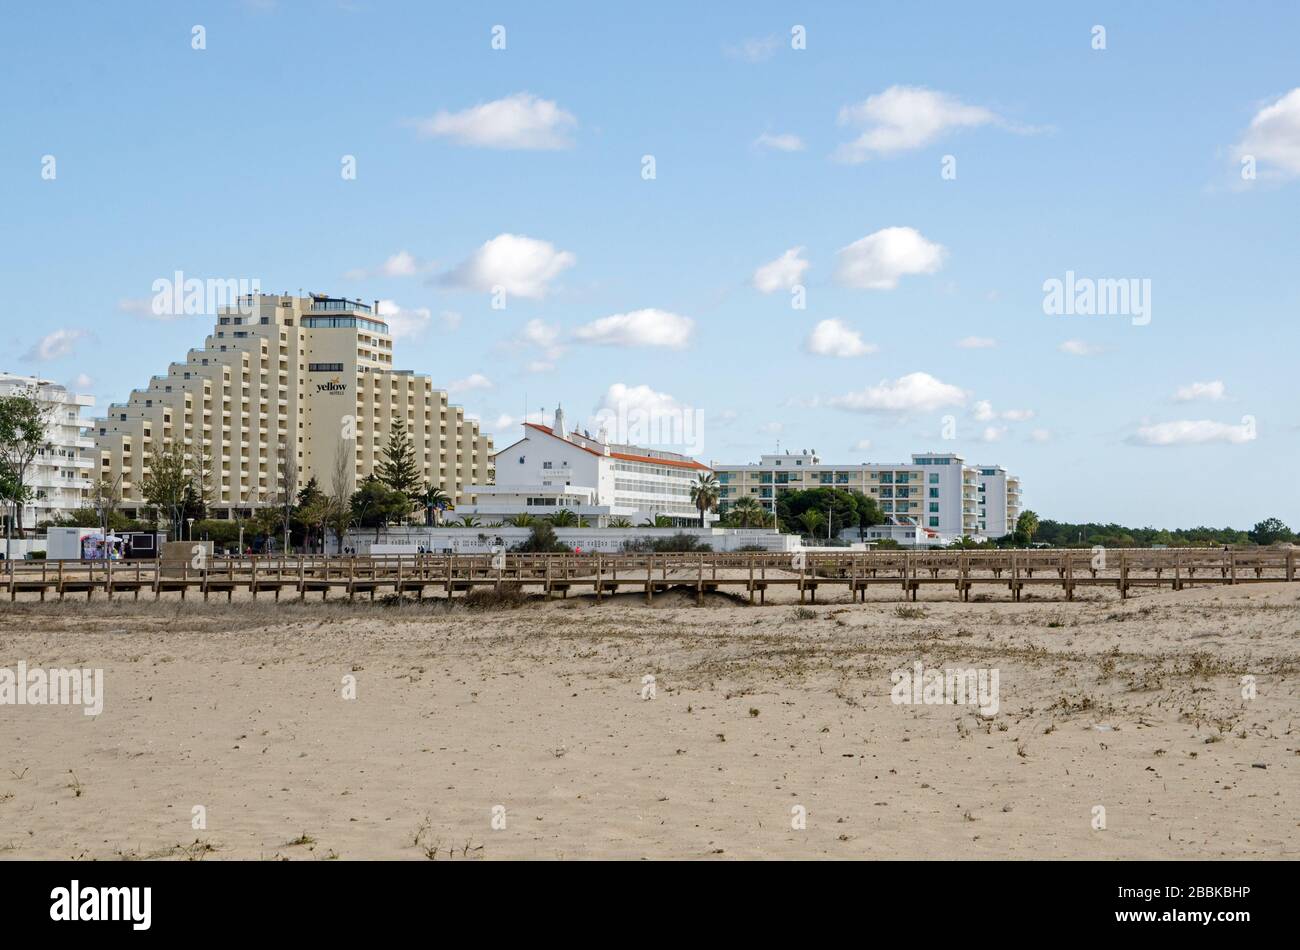 Monte Gordo, Portugal - 18. November 2019: Hotels mit Blick auf den Strand am Algarve-Badeort Monte Gordo in Portugal. Stockfoto